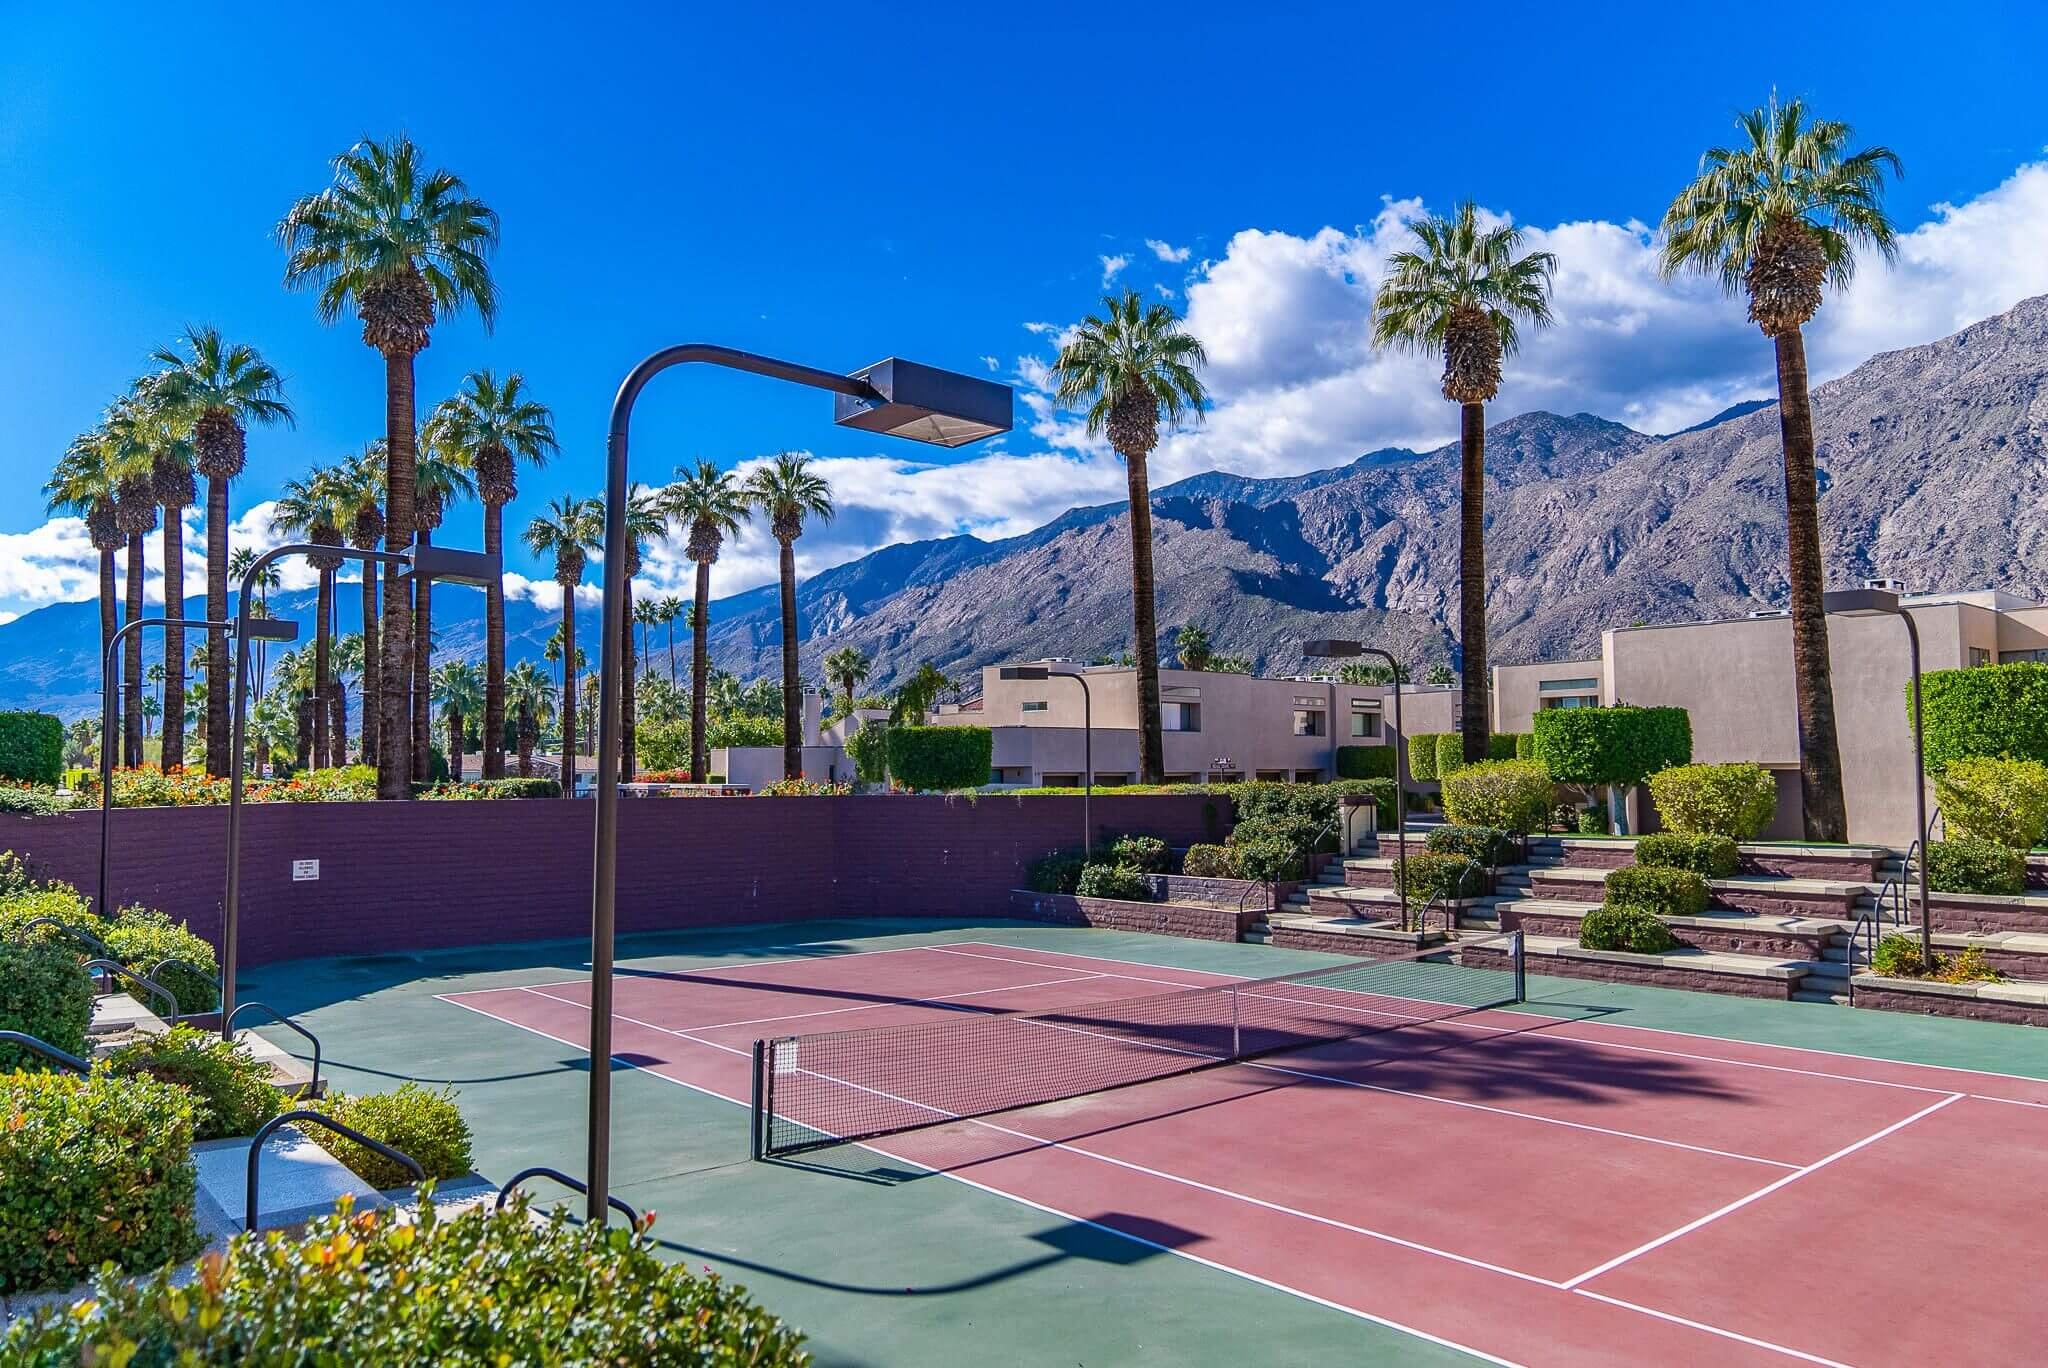 Village Racquet Club Tennis Courts